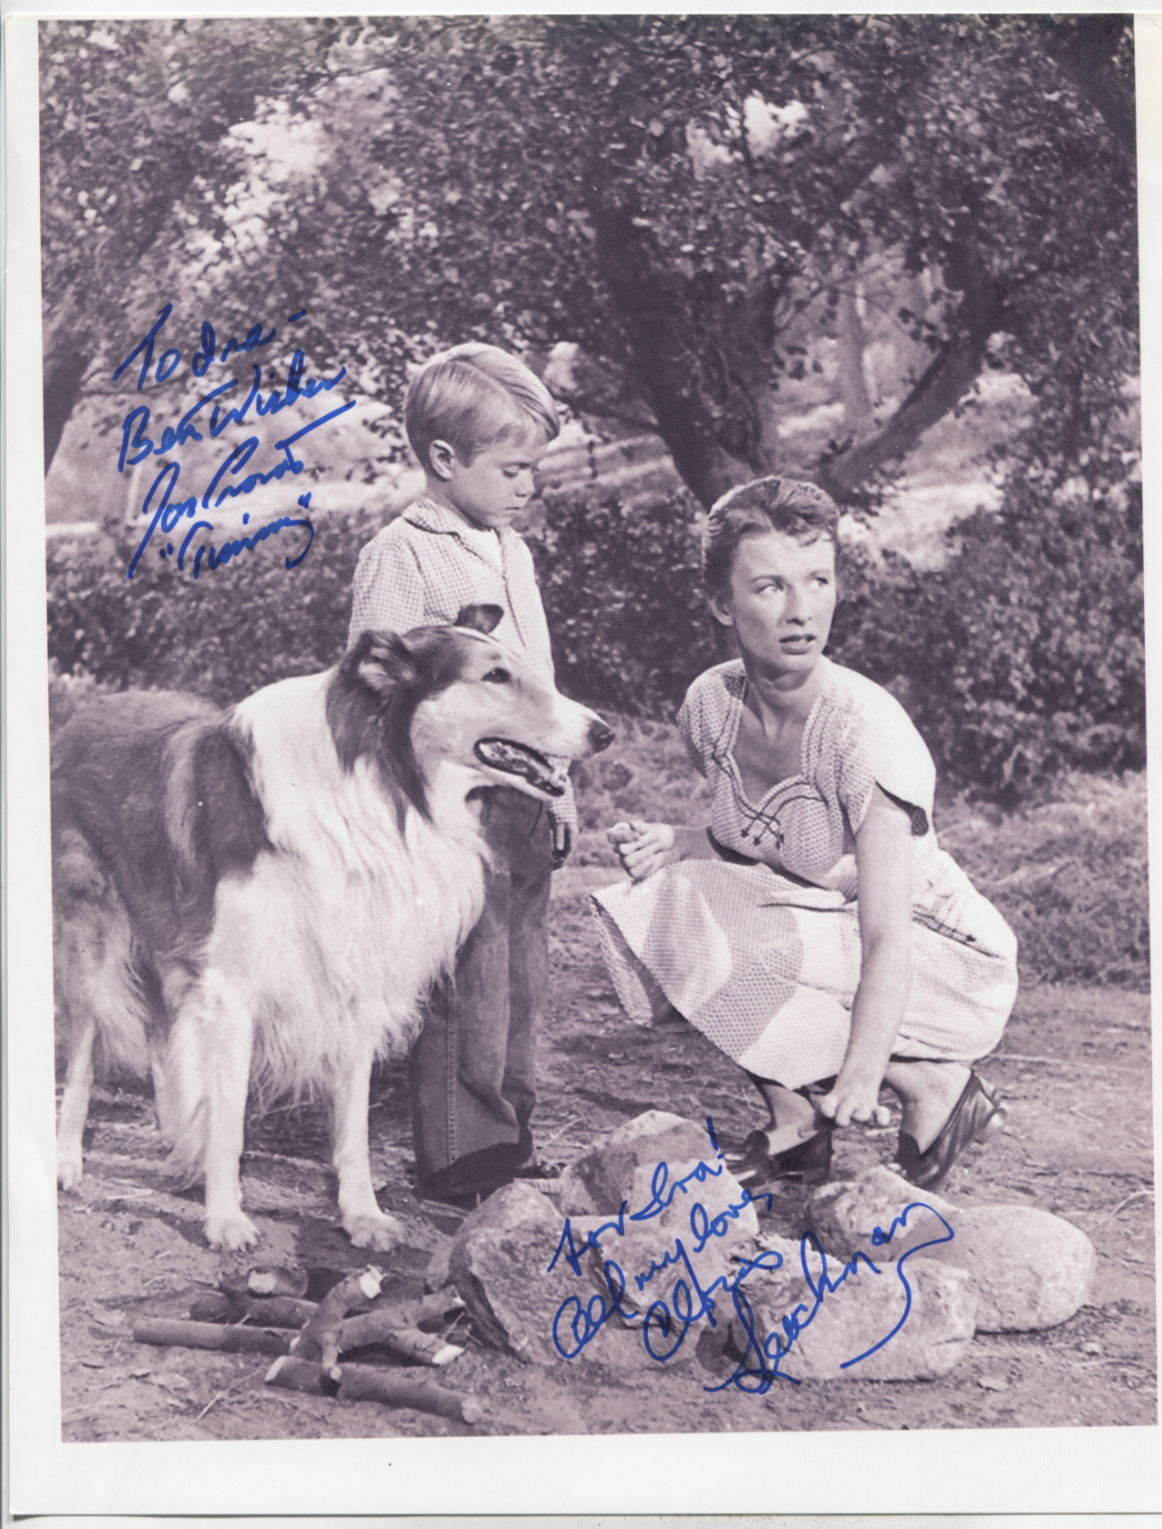 Jon Provost & Cloris Leachman Lassie Autographed 8.5x11 Photo w/COA WWE21-125